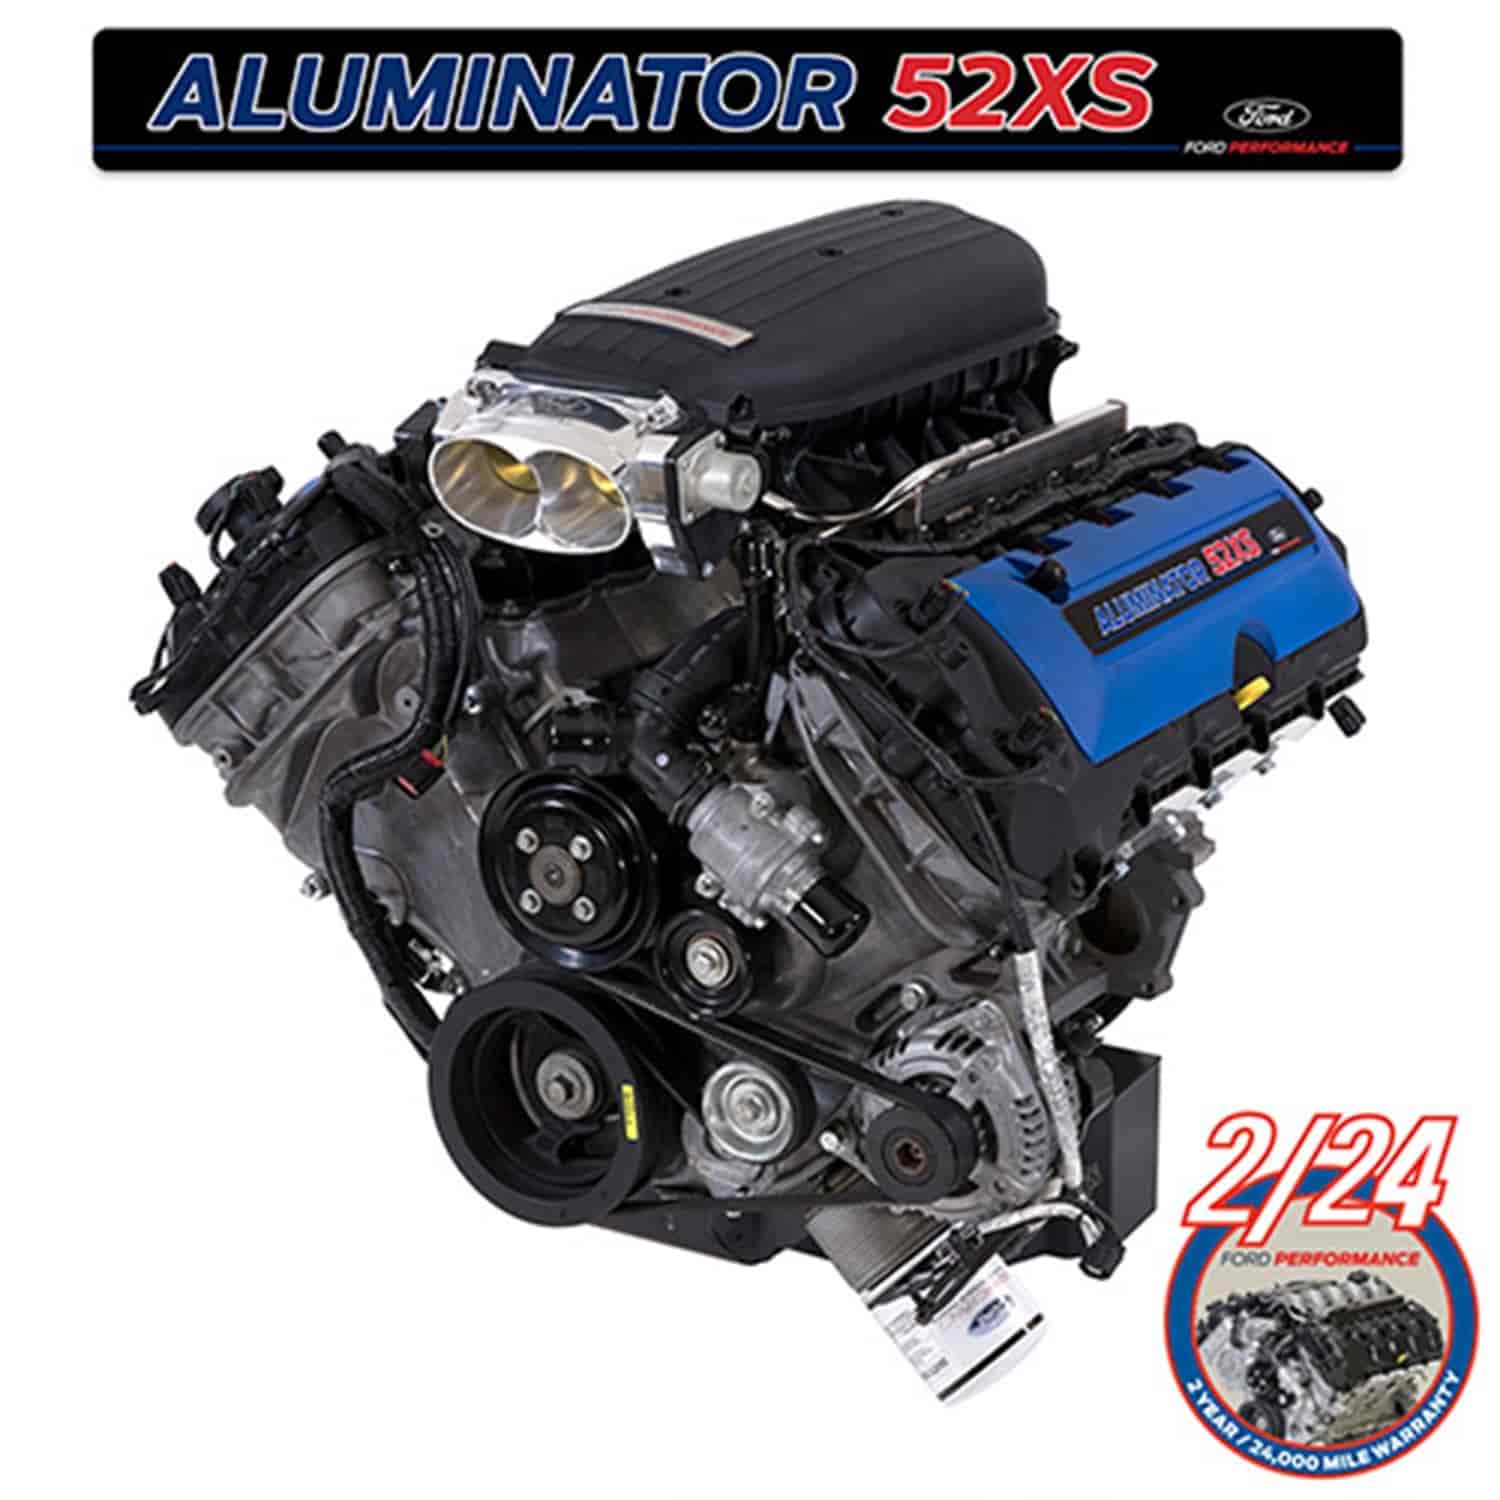 5.2L Aluminator XS Crate Engine